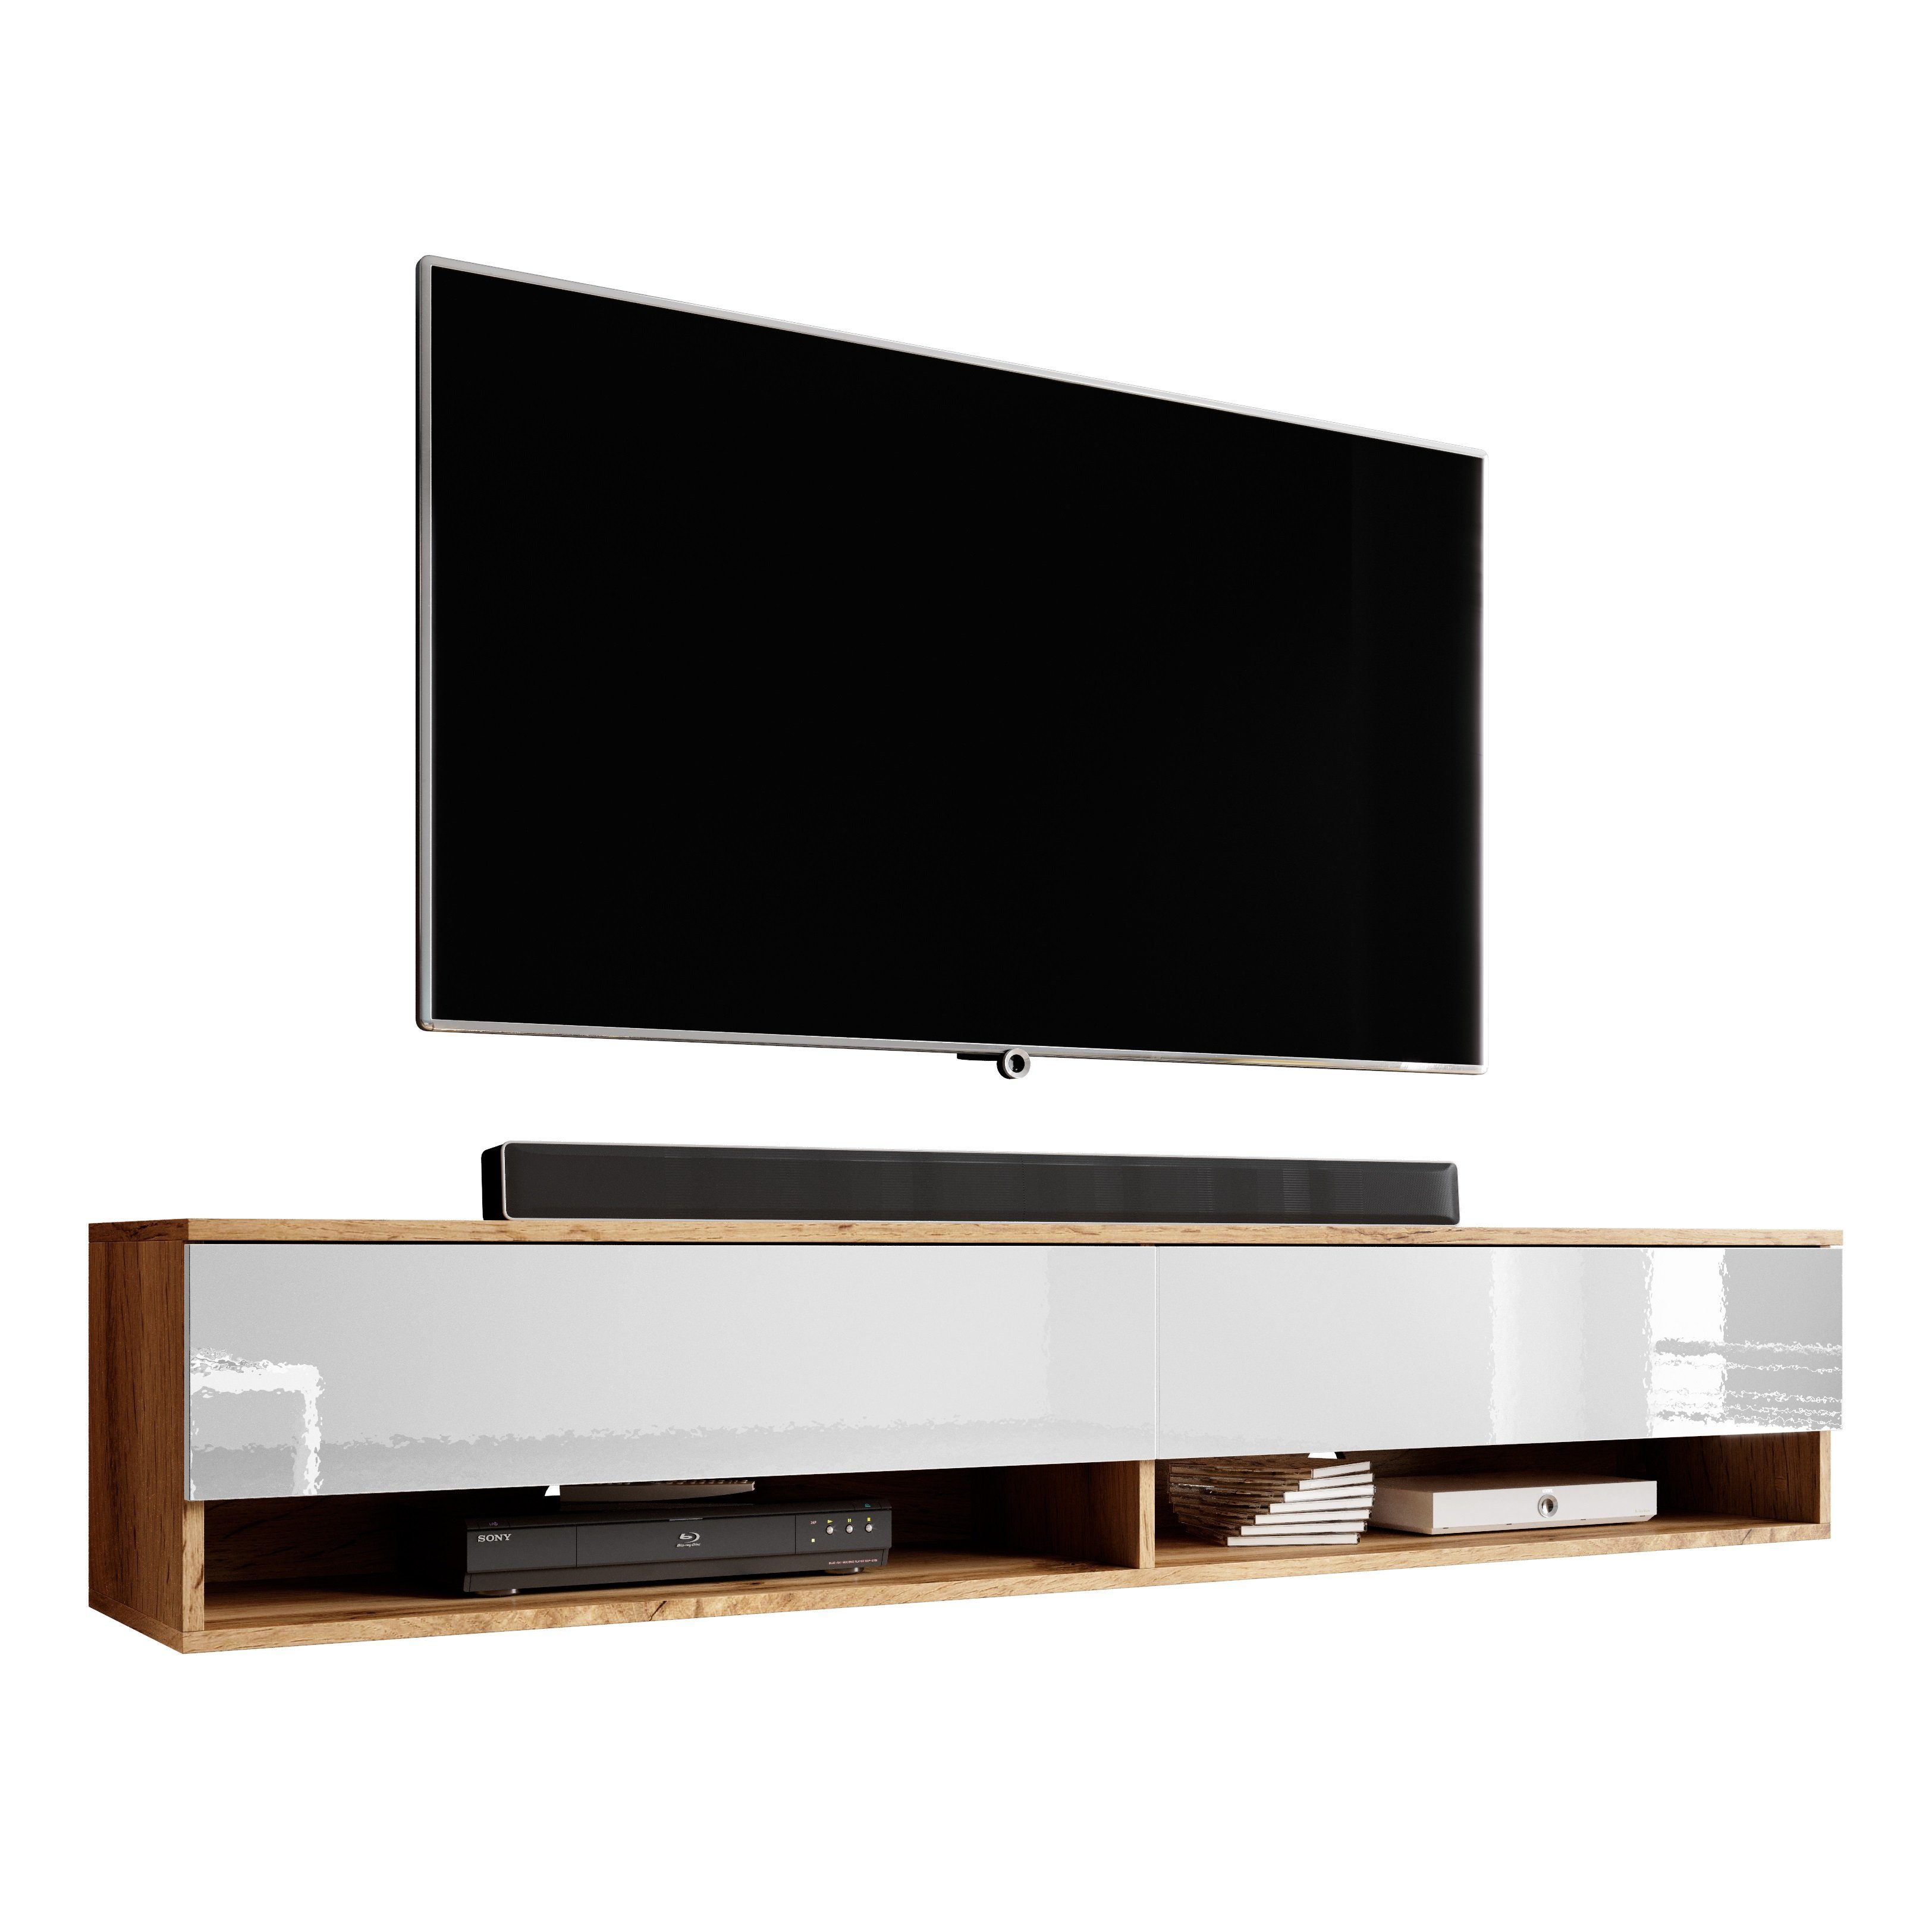 Furnix Sideboard Alyx LED-Beleuchtung, Schrank B160 T32 x Lowboard TV TV-Kommode, x Glanz Wotan/Weiß OHNE 160 H34 cm